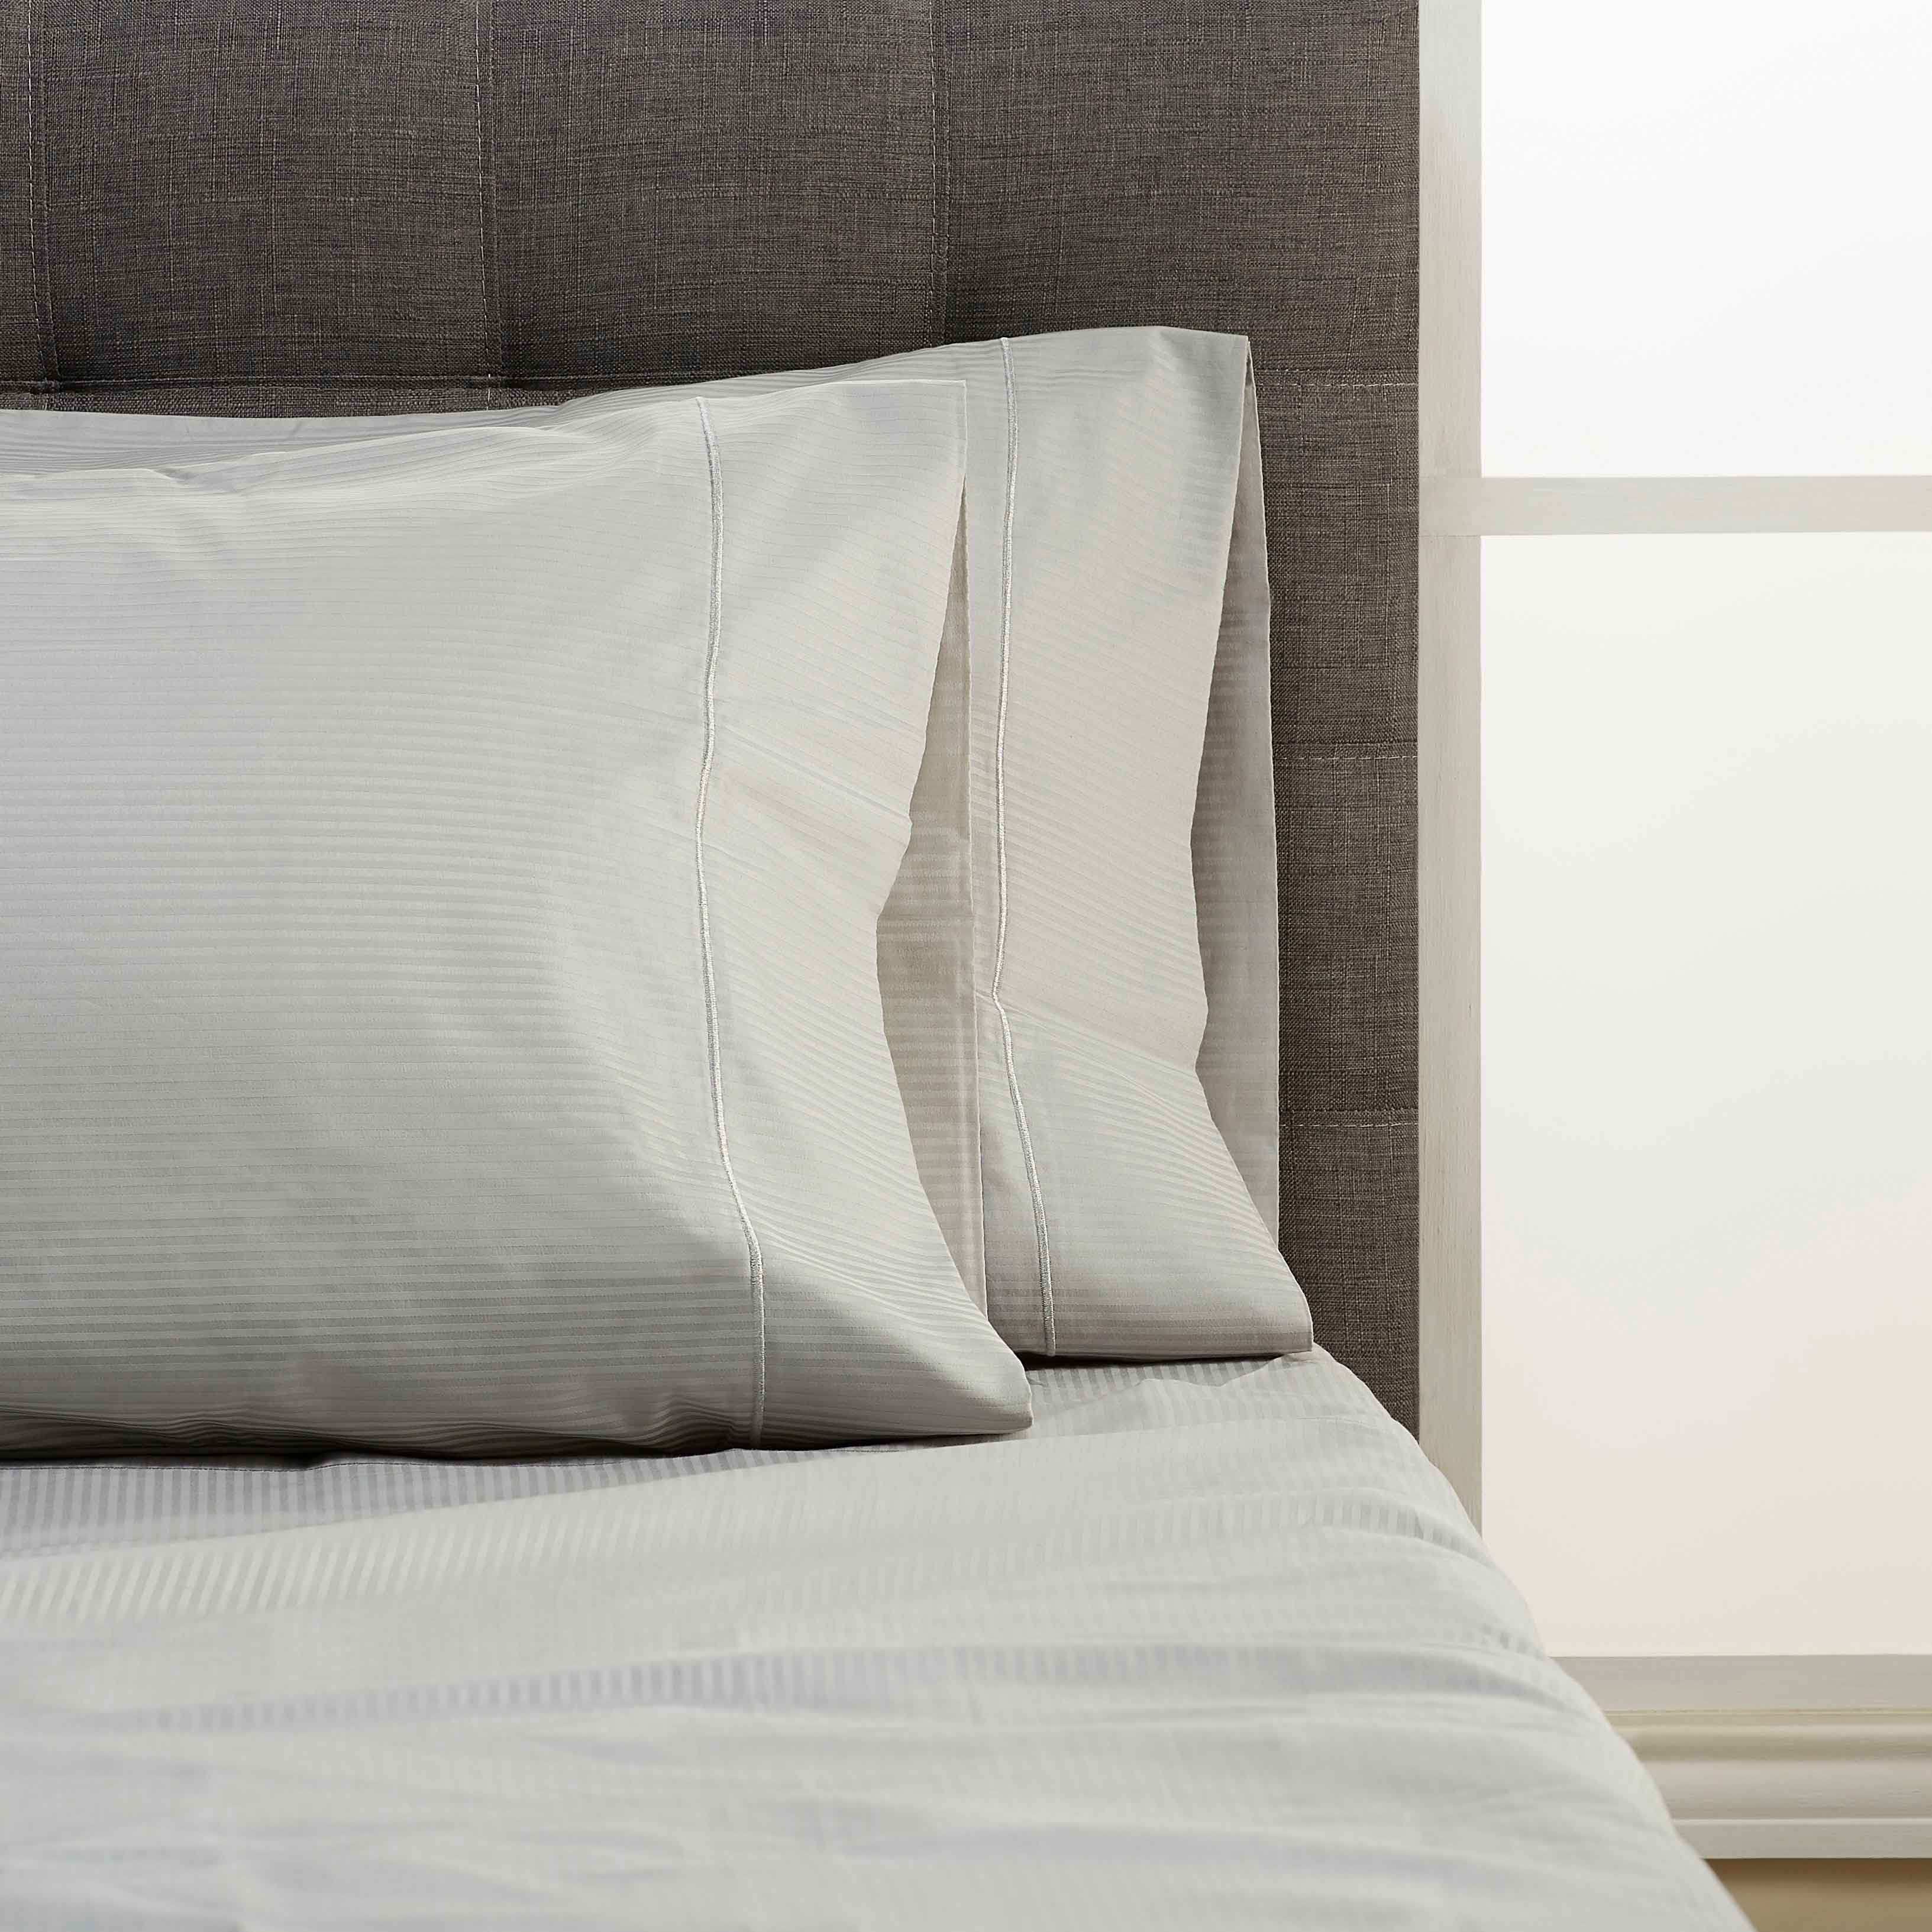 Shunjie.Home 100% Egyptian Cotton Standard Pillow Protectors Set